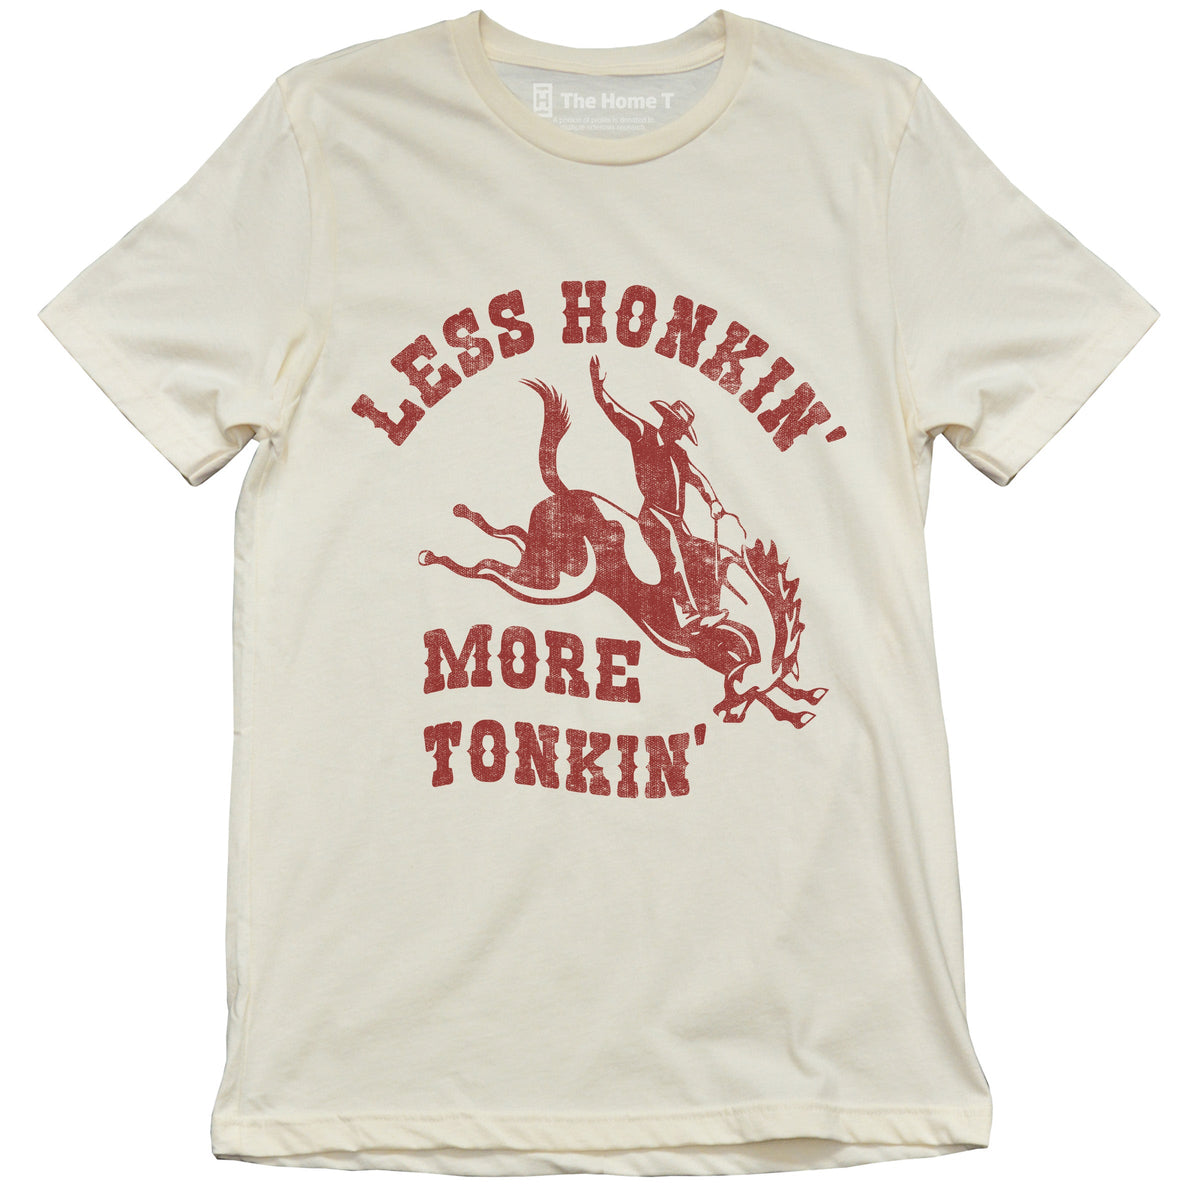 Less Honkin' More Tonkin'